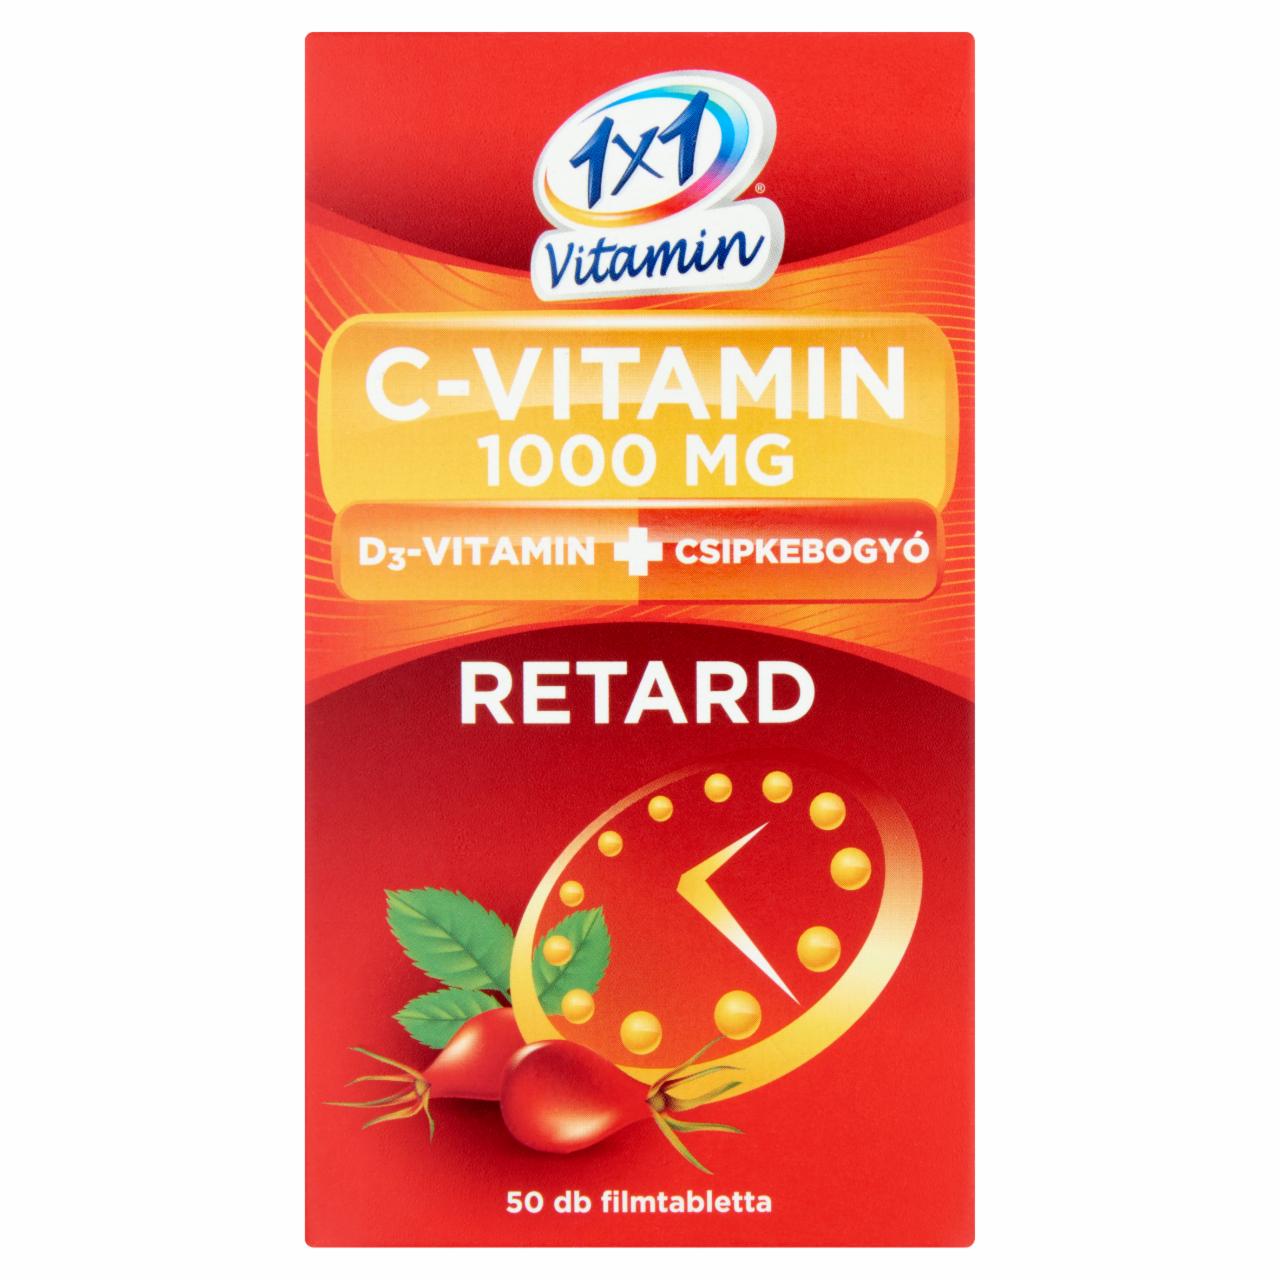 Képek - 1x1 Vitamin C-vitamin 1000 mg retard étrend-kiegészítő filmtabletta 50 pcs 65 g